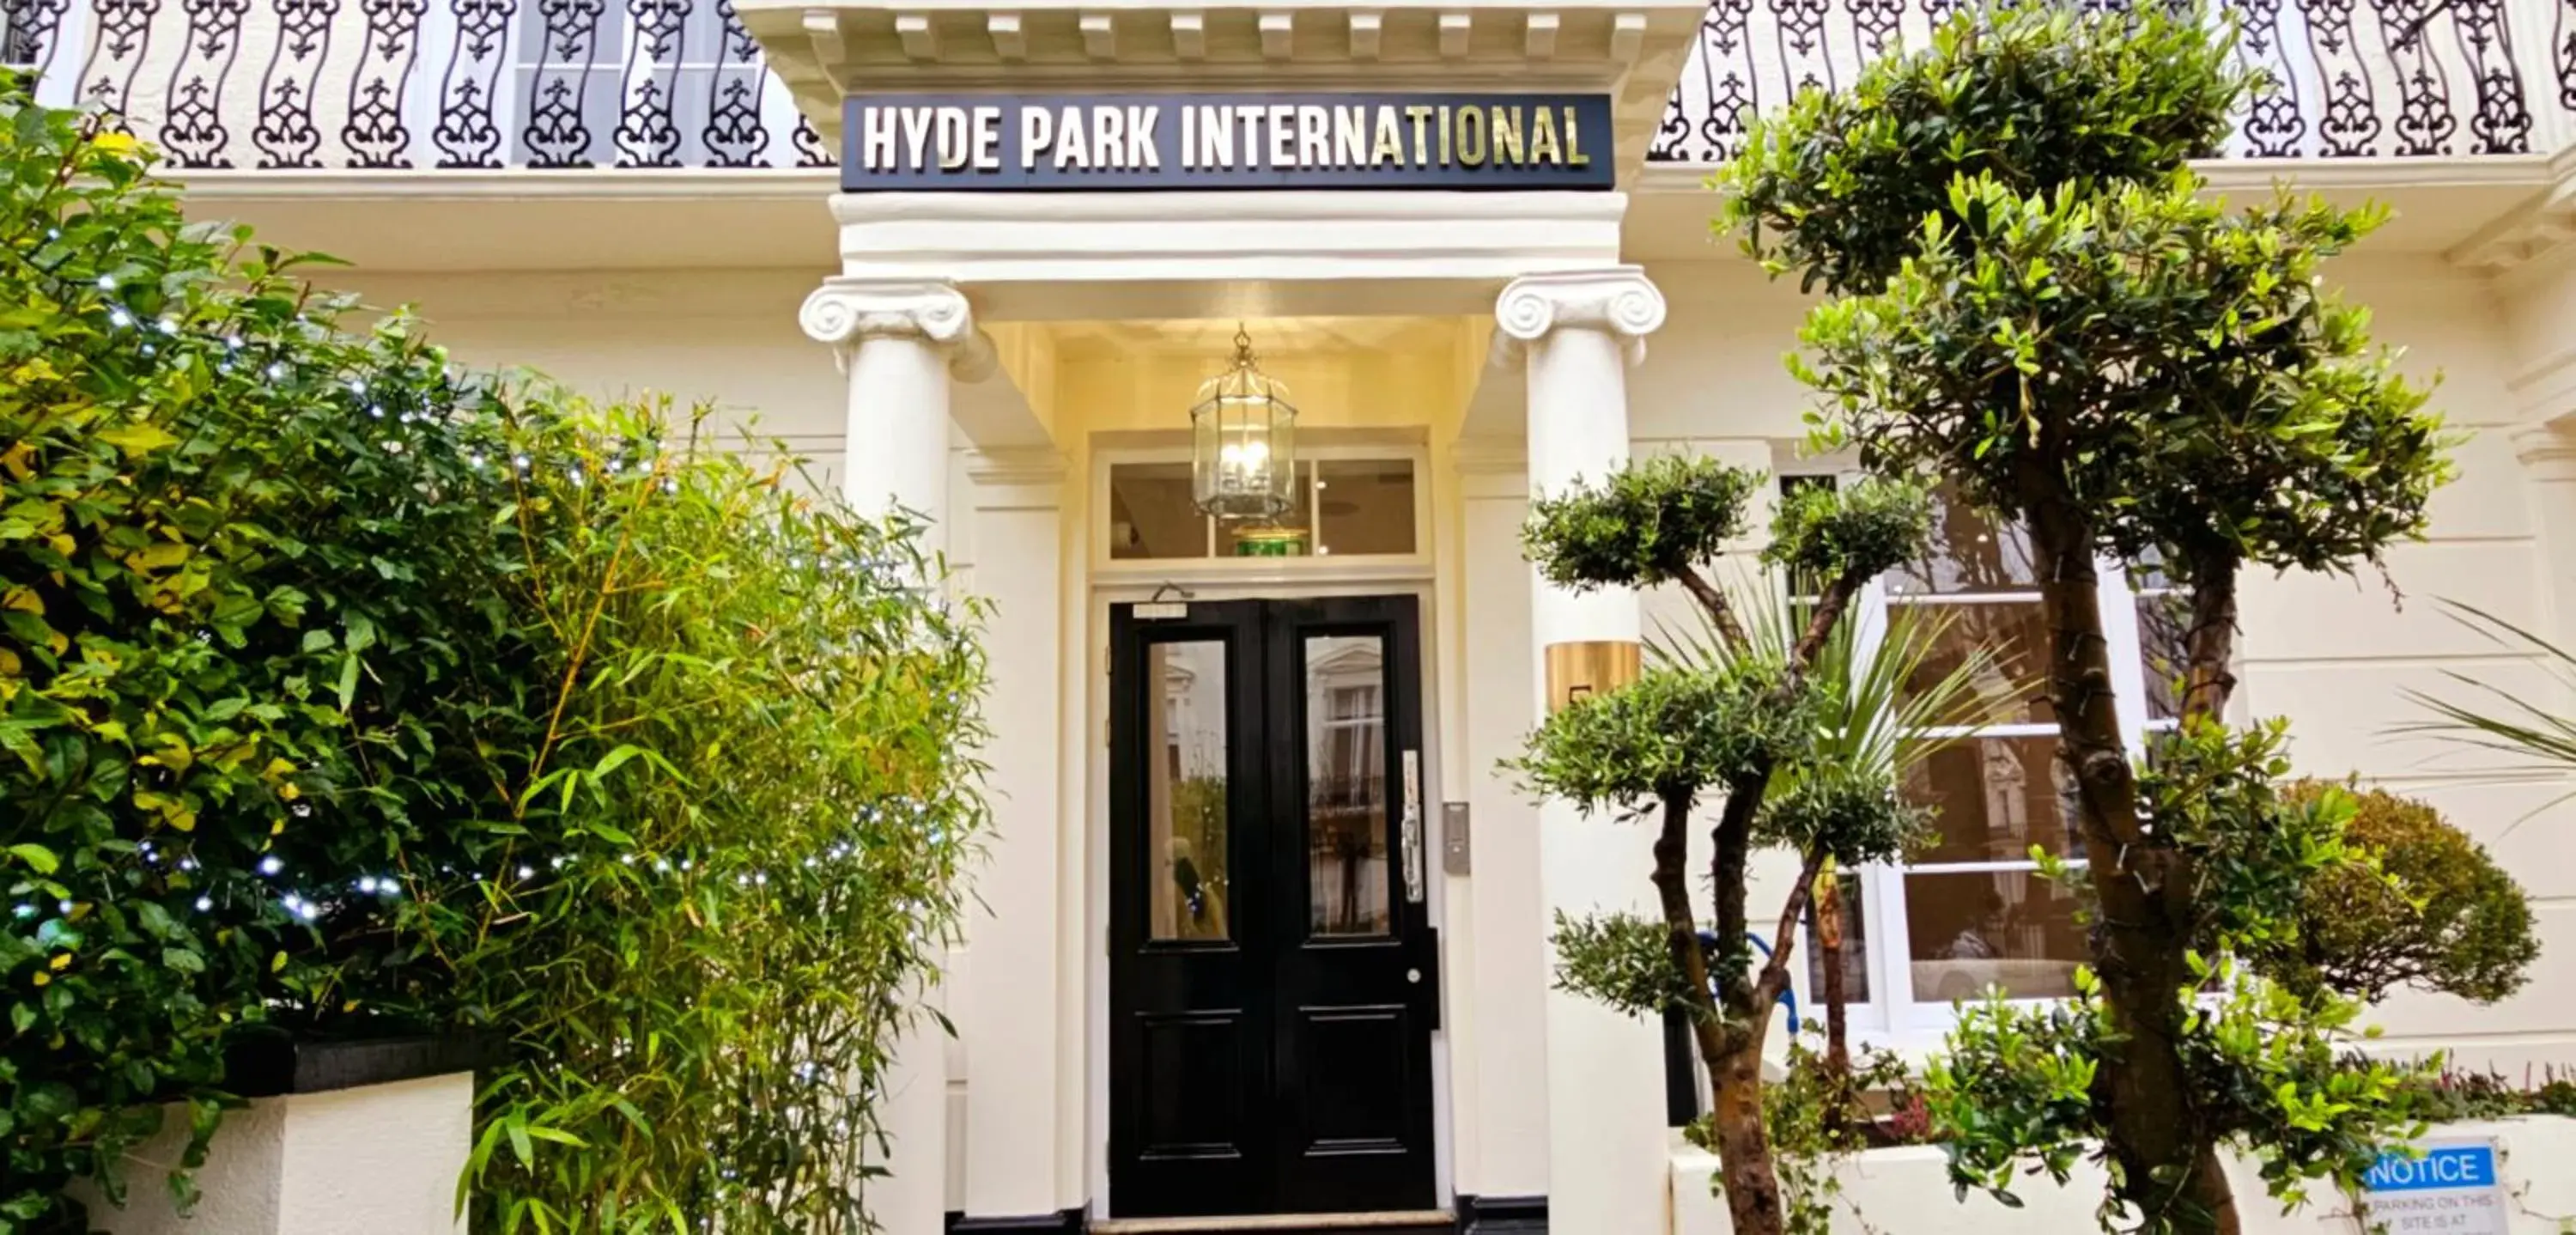 Facade/Entrance in Hyde Park International - Member of Park Grand London